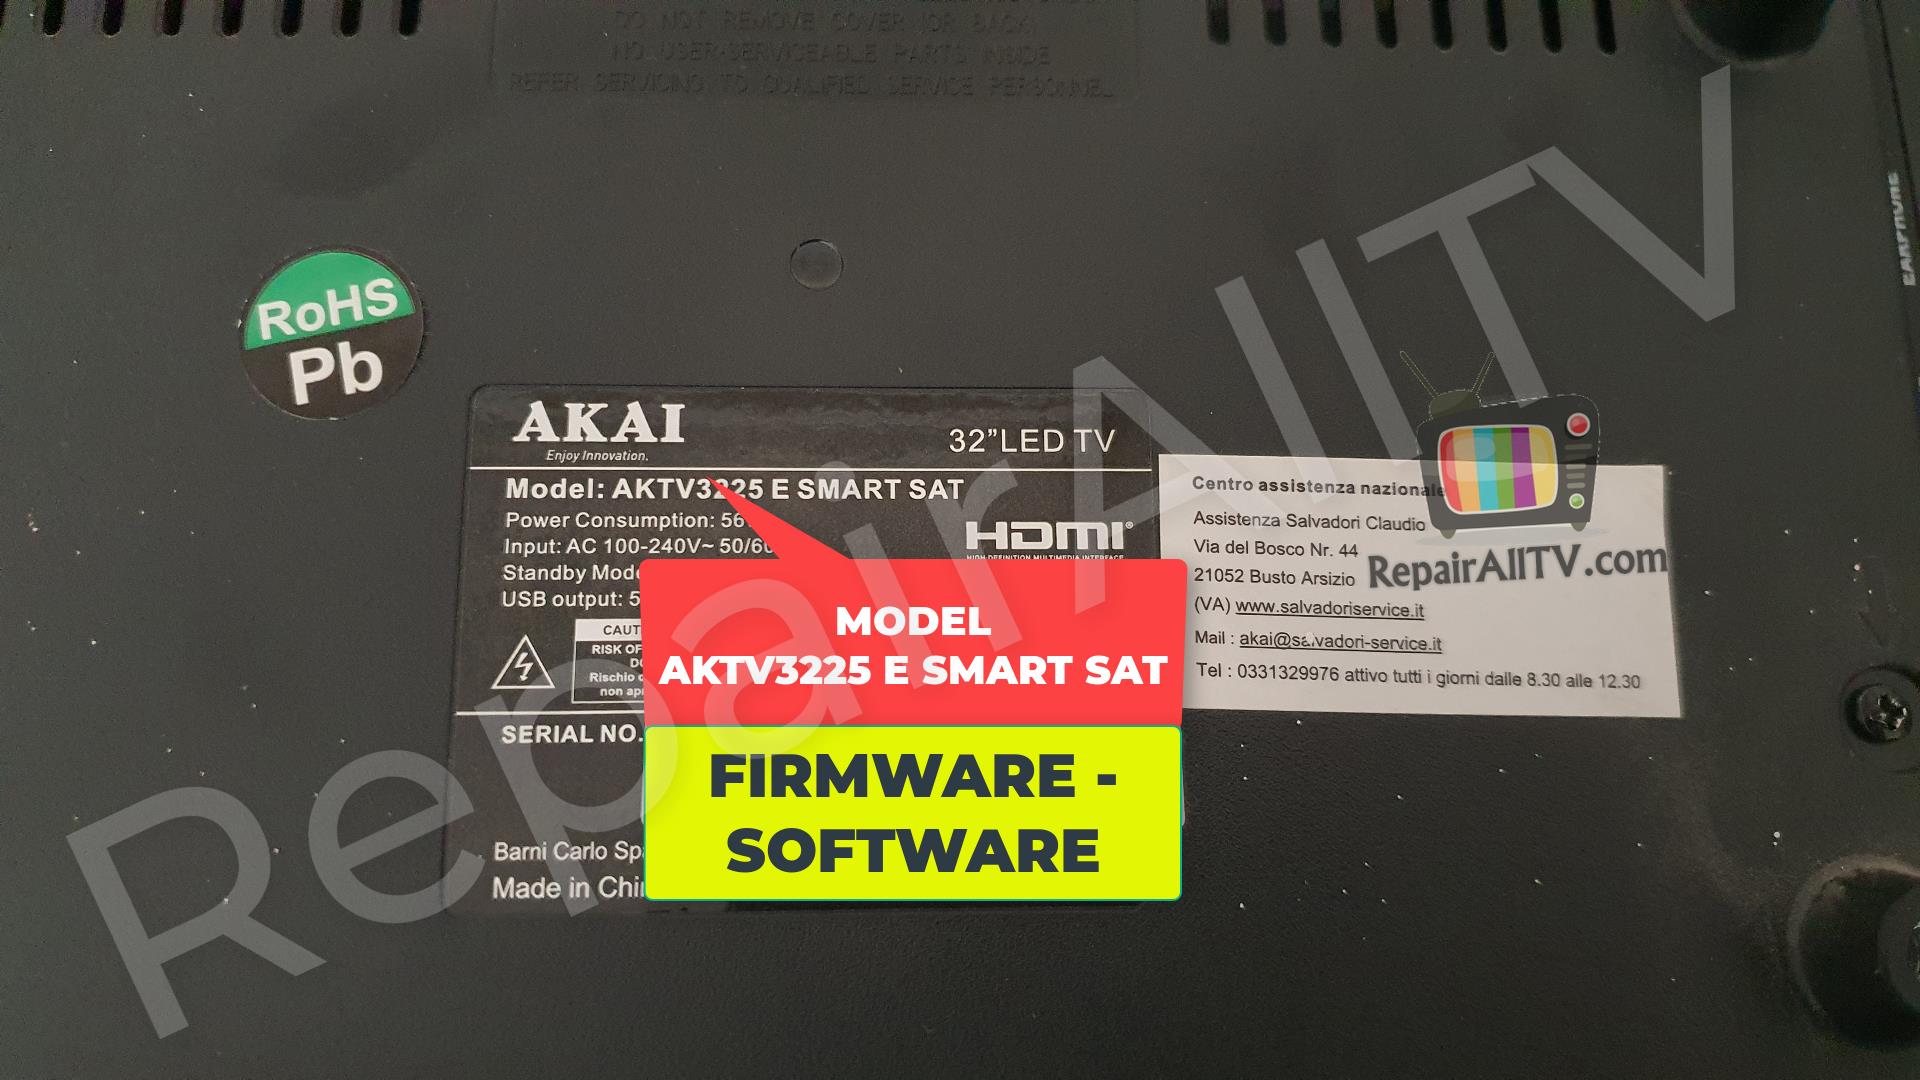 AKAI AKTV3225 E SMART SAT